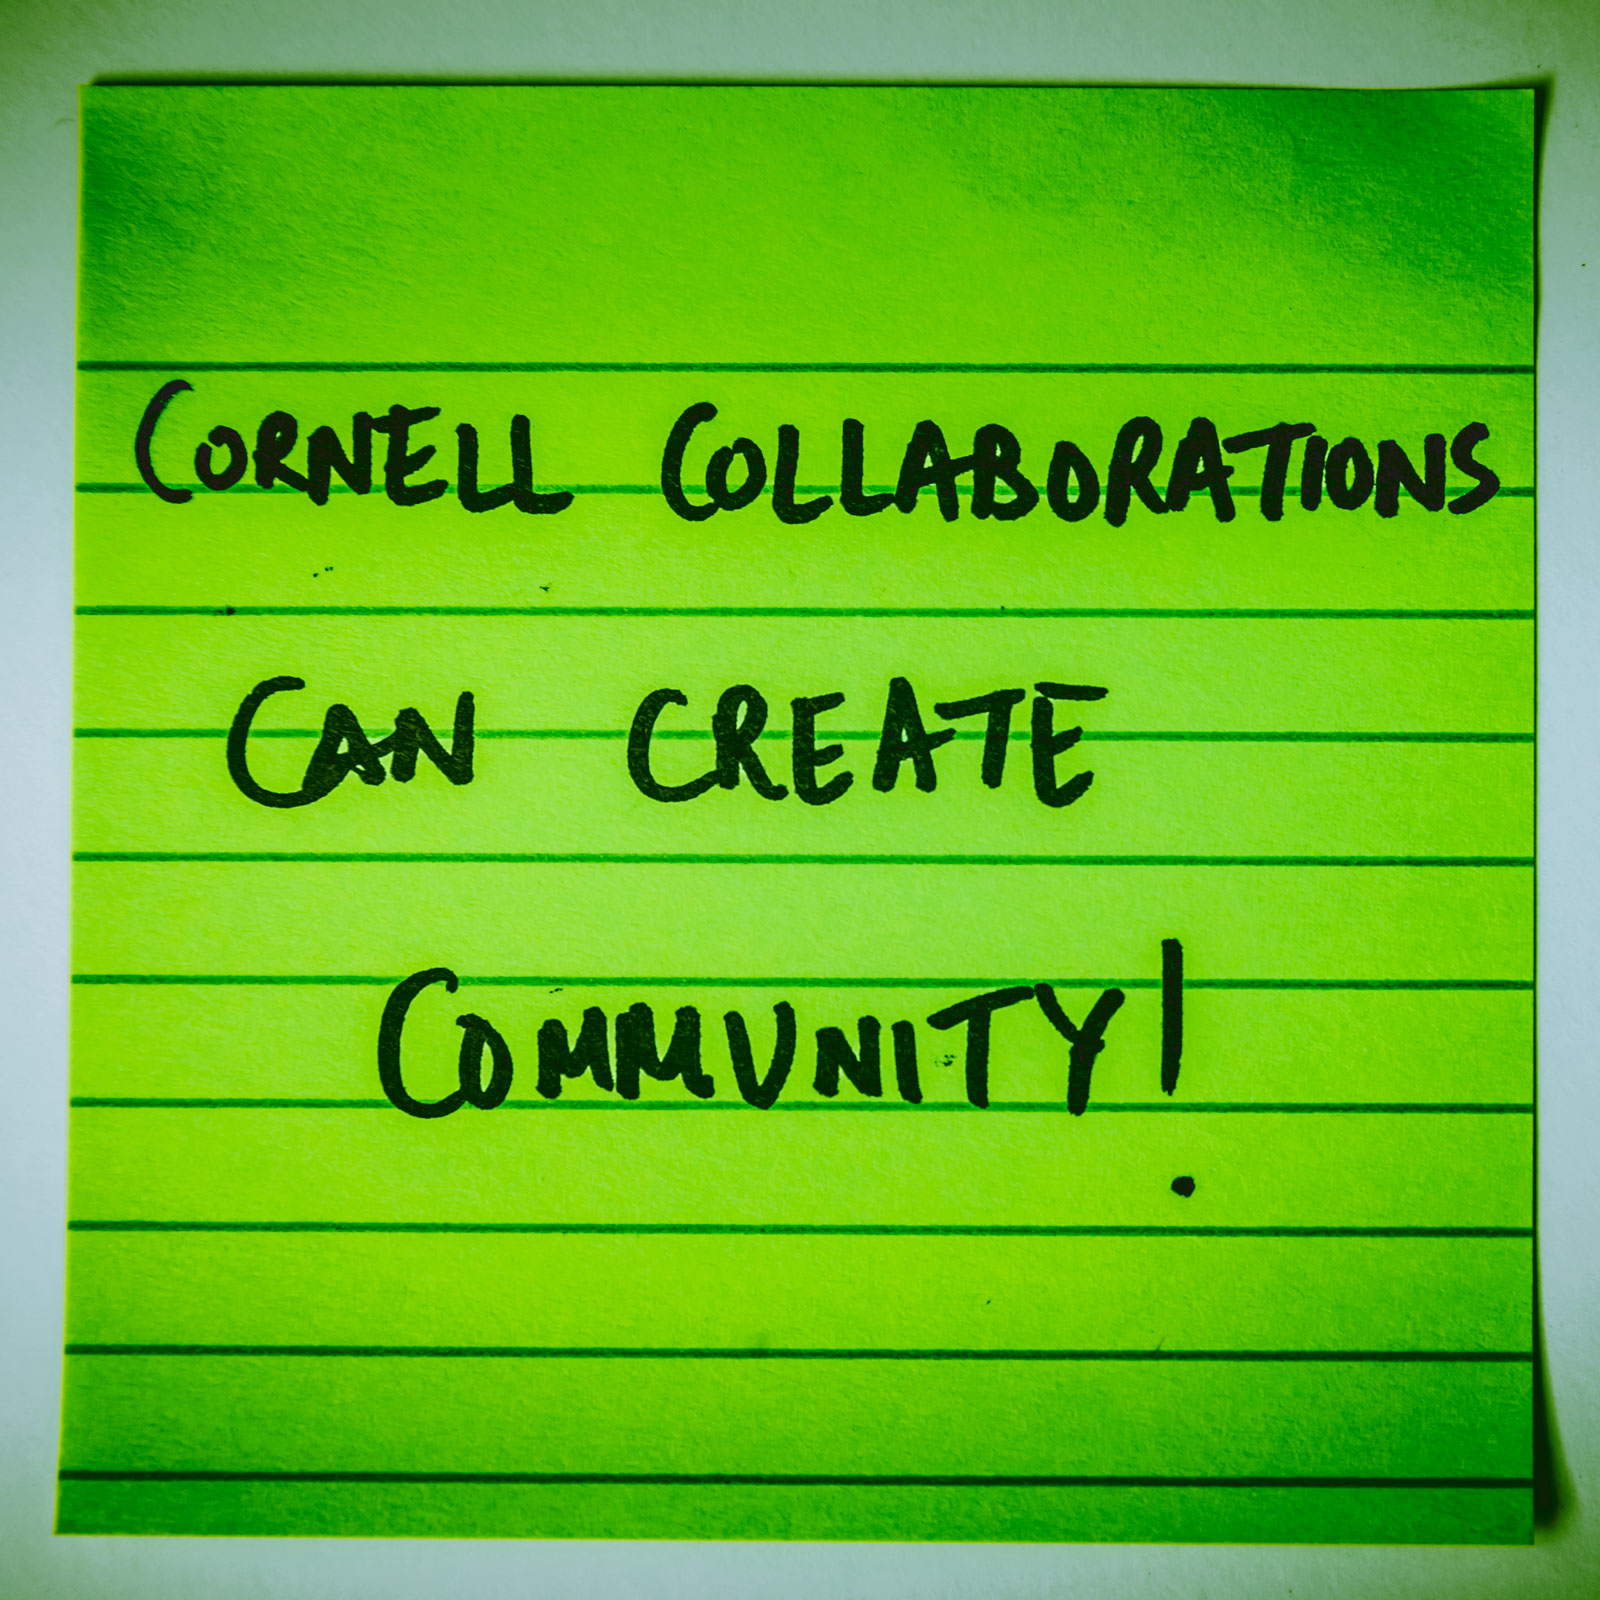 Cornell collaborations can create community!